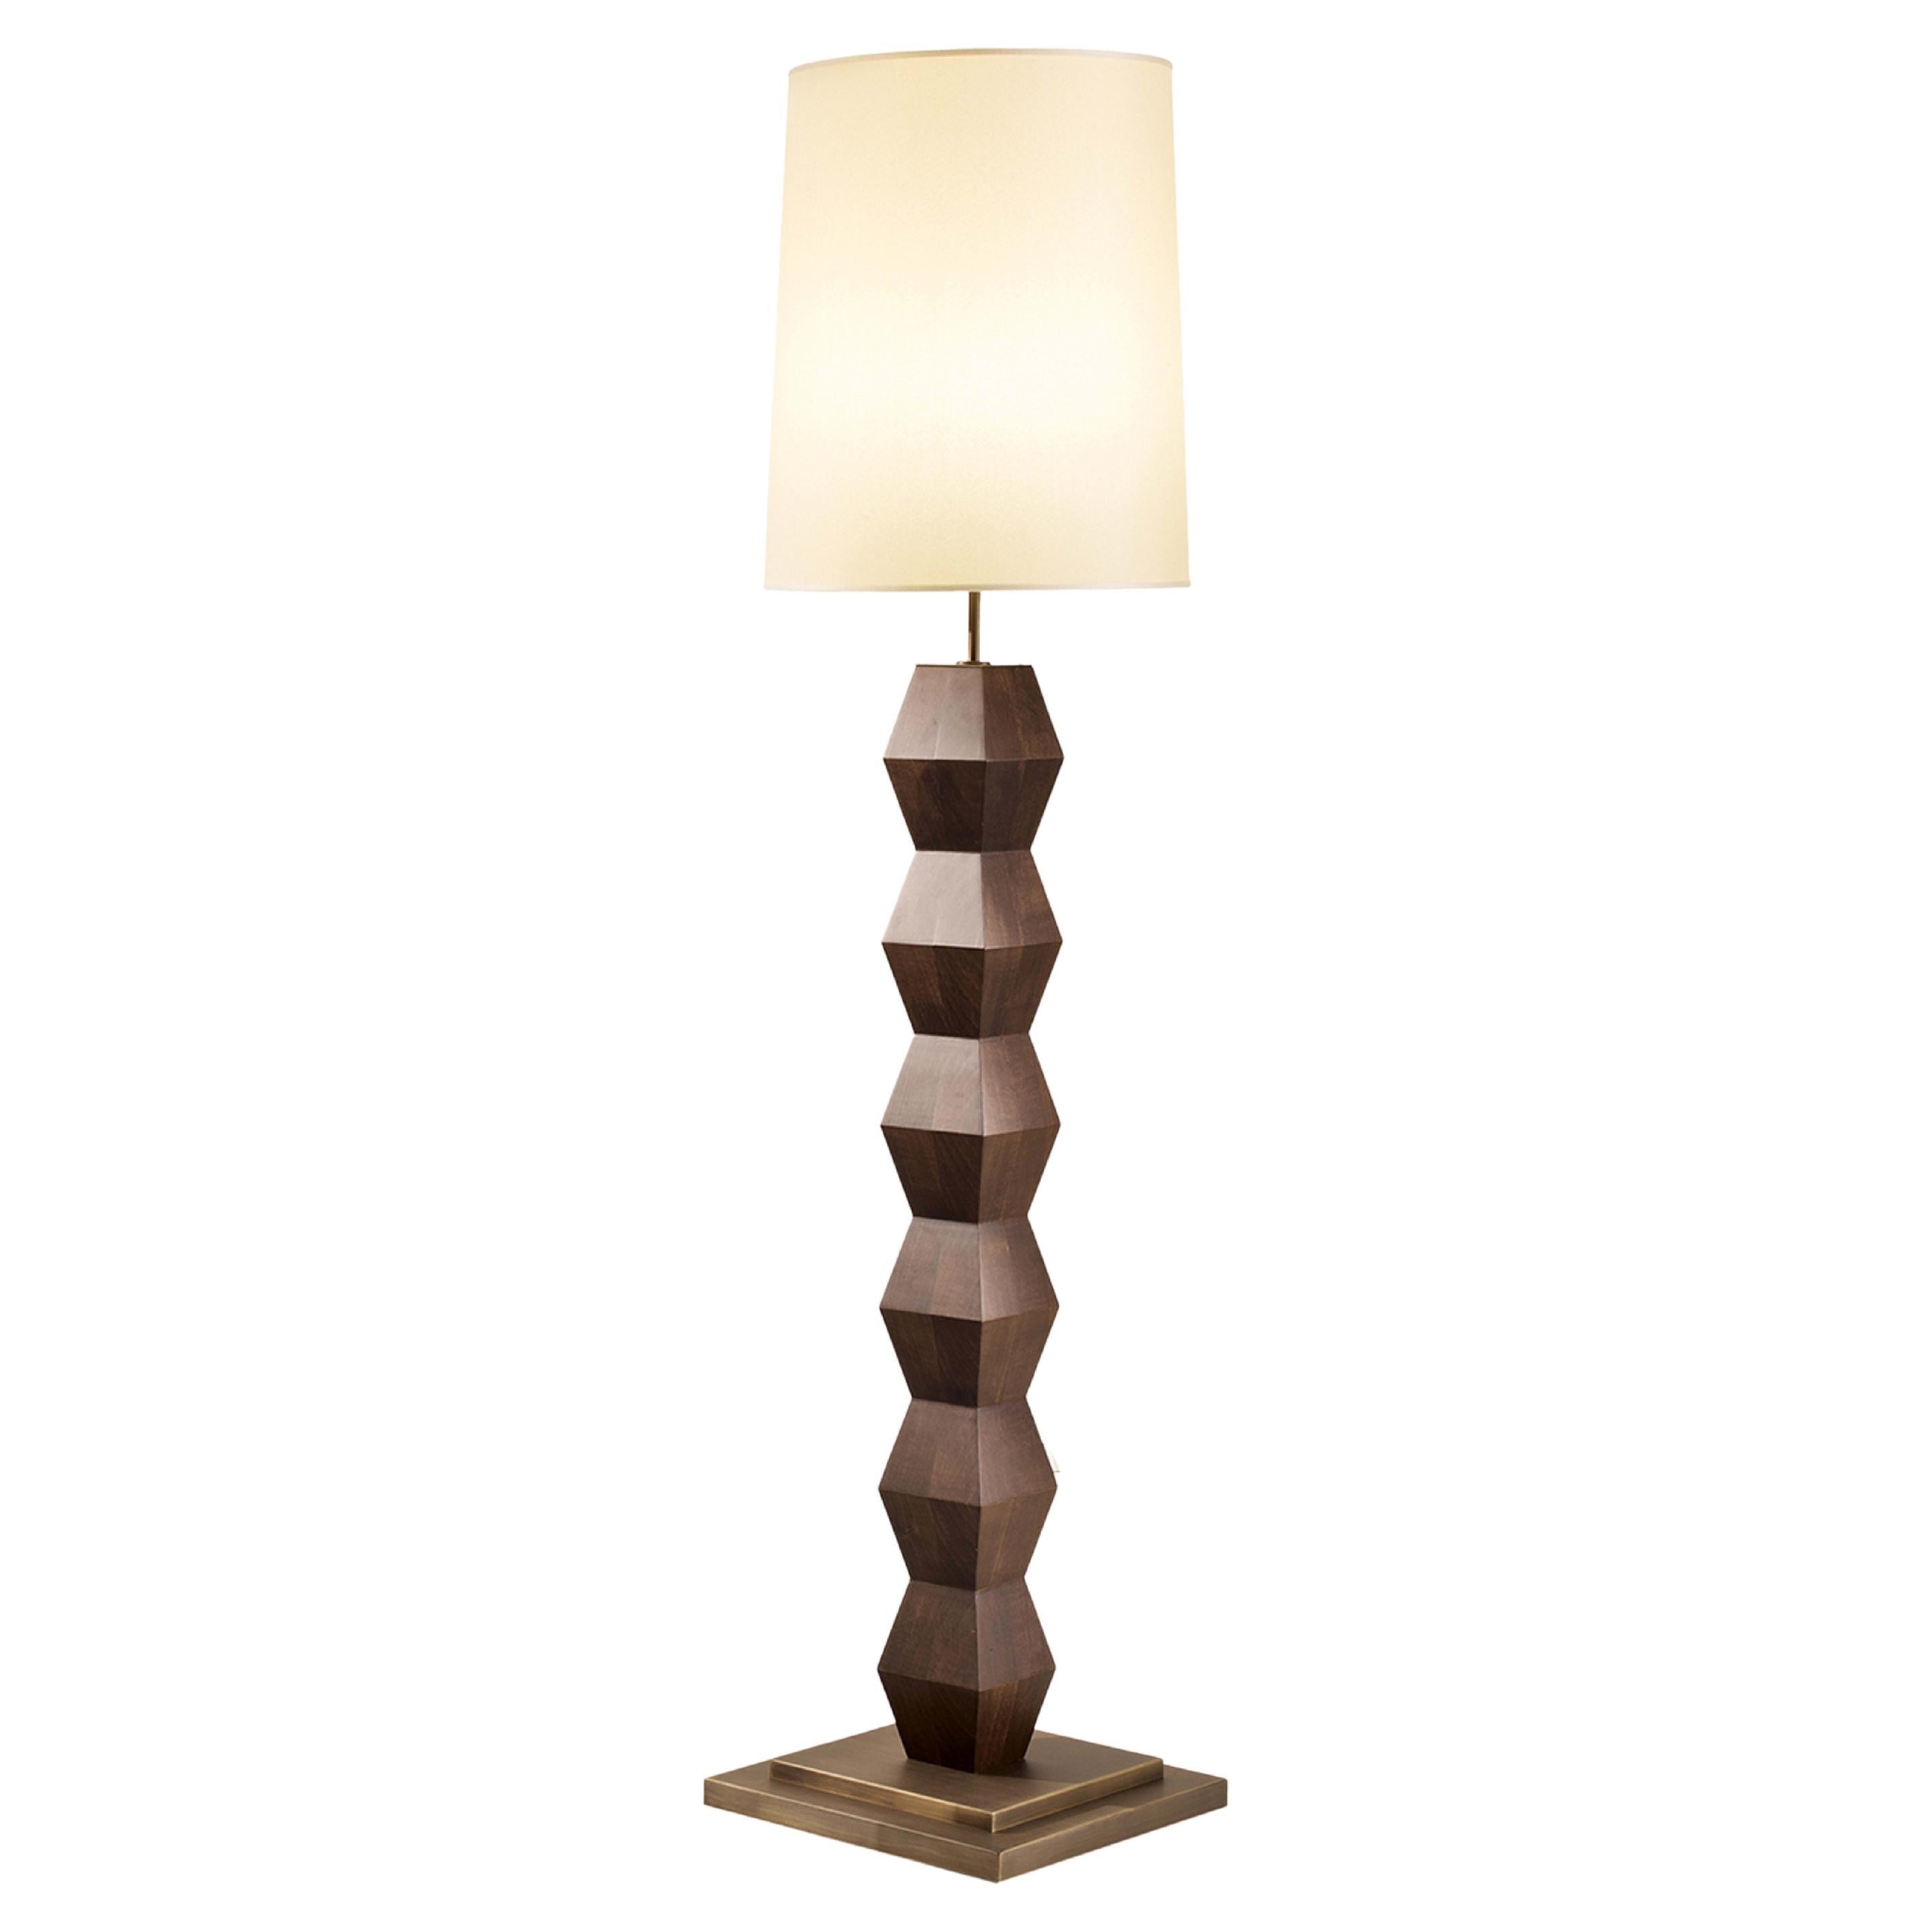 Kigelia Floor Lamp For Sale